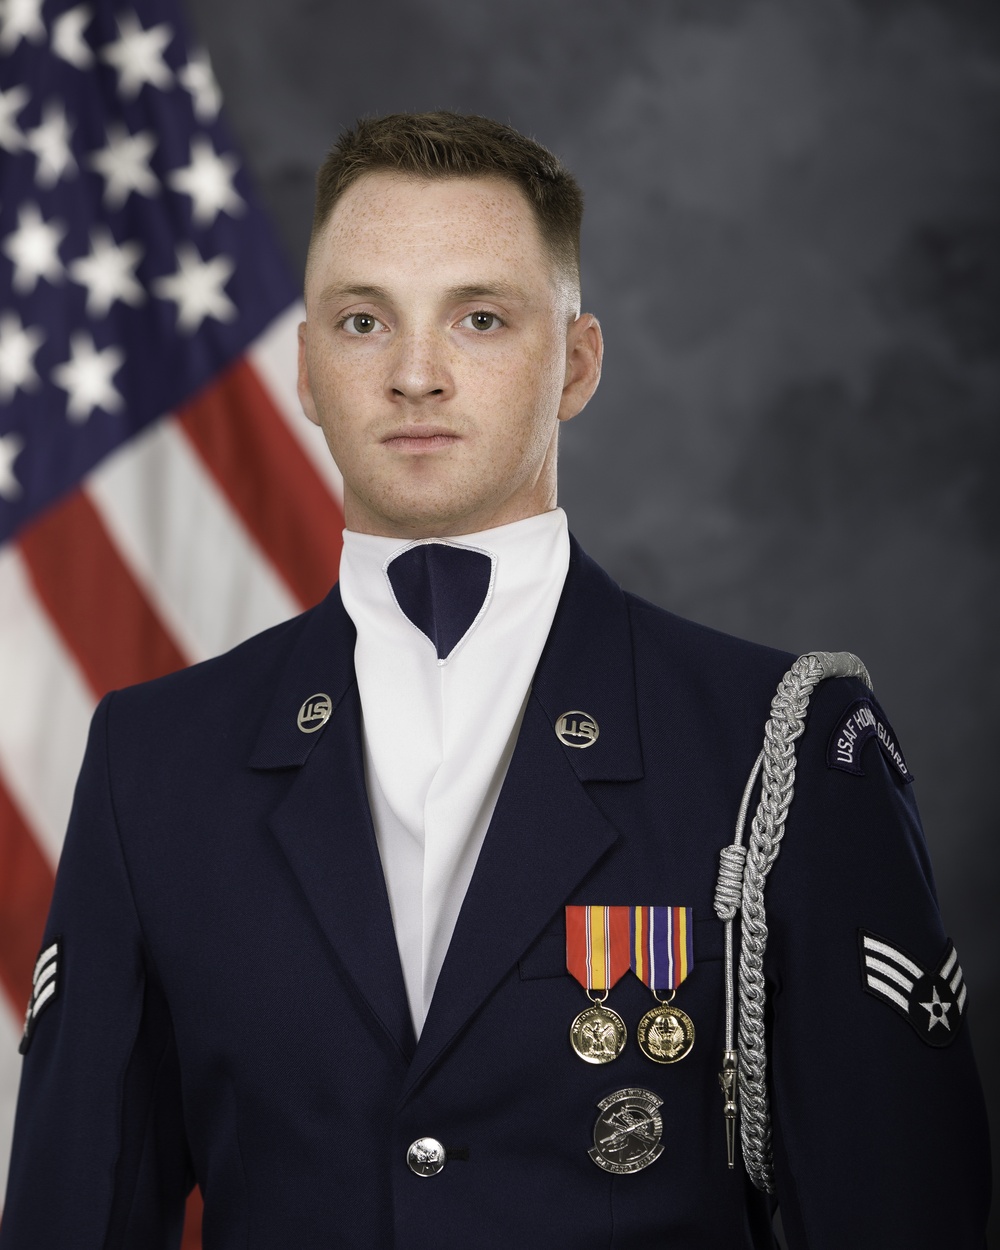 Official portrait, US Air Force Honor Guard Drill Team member, Senior Airman Jacob J.W. Swank, US Air Force